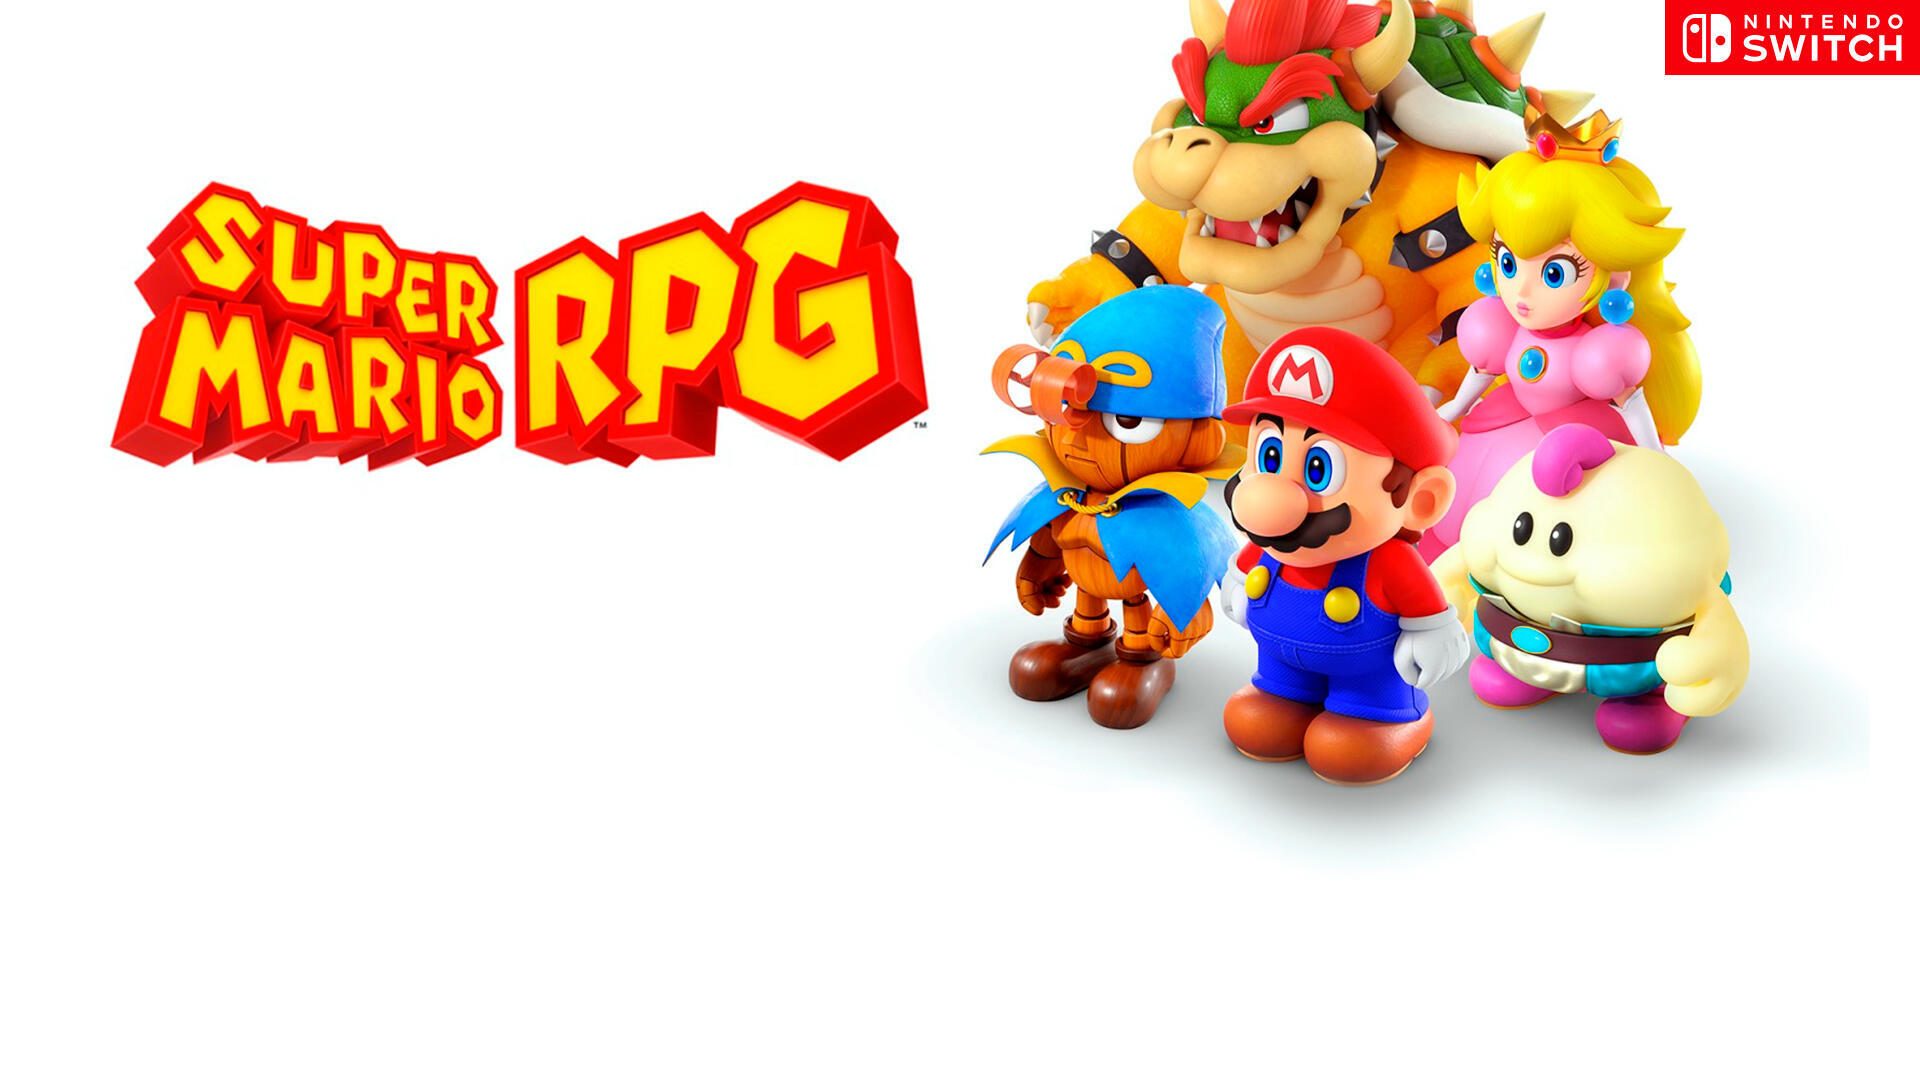 Super Mario RPG Remake